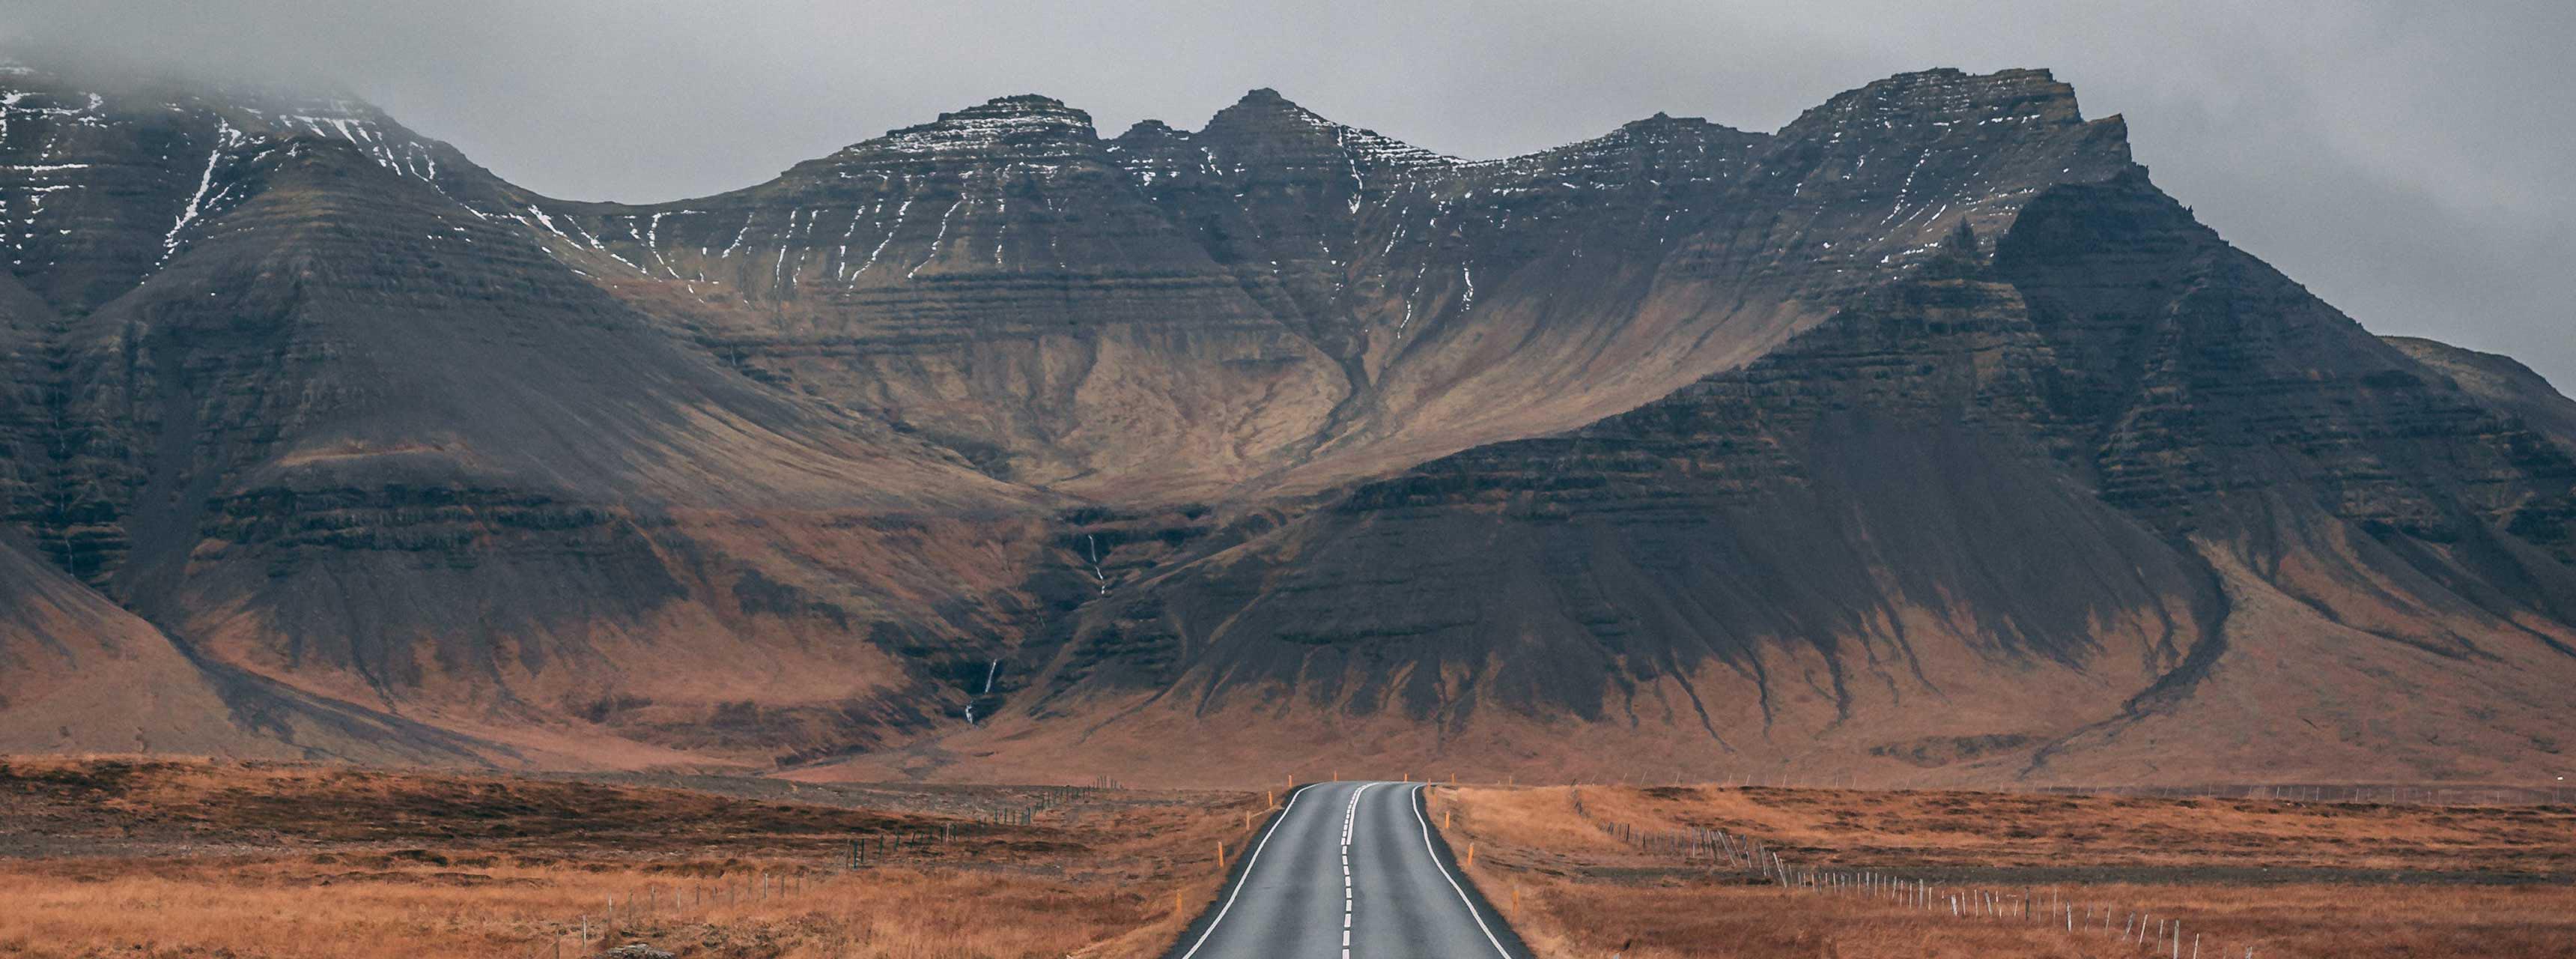 Road through mountains image